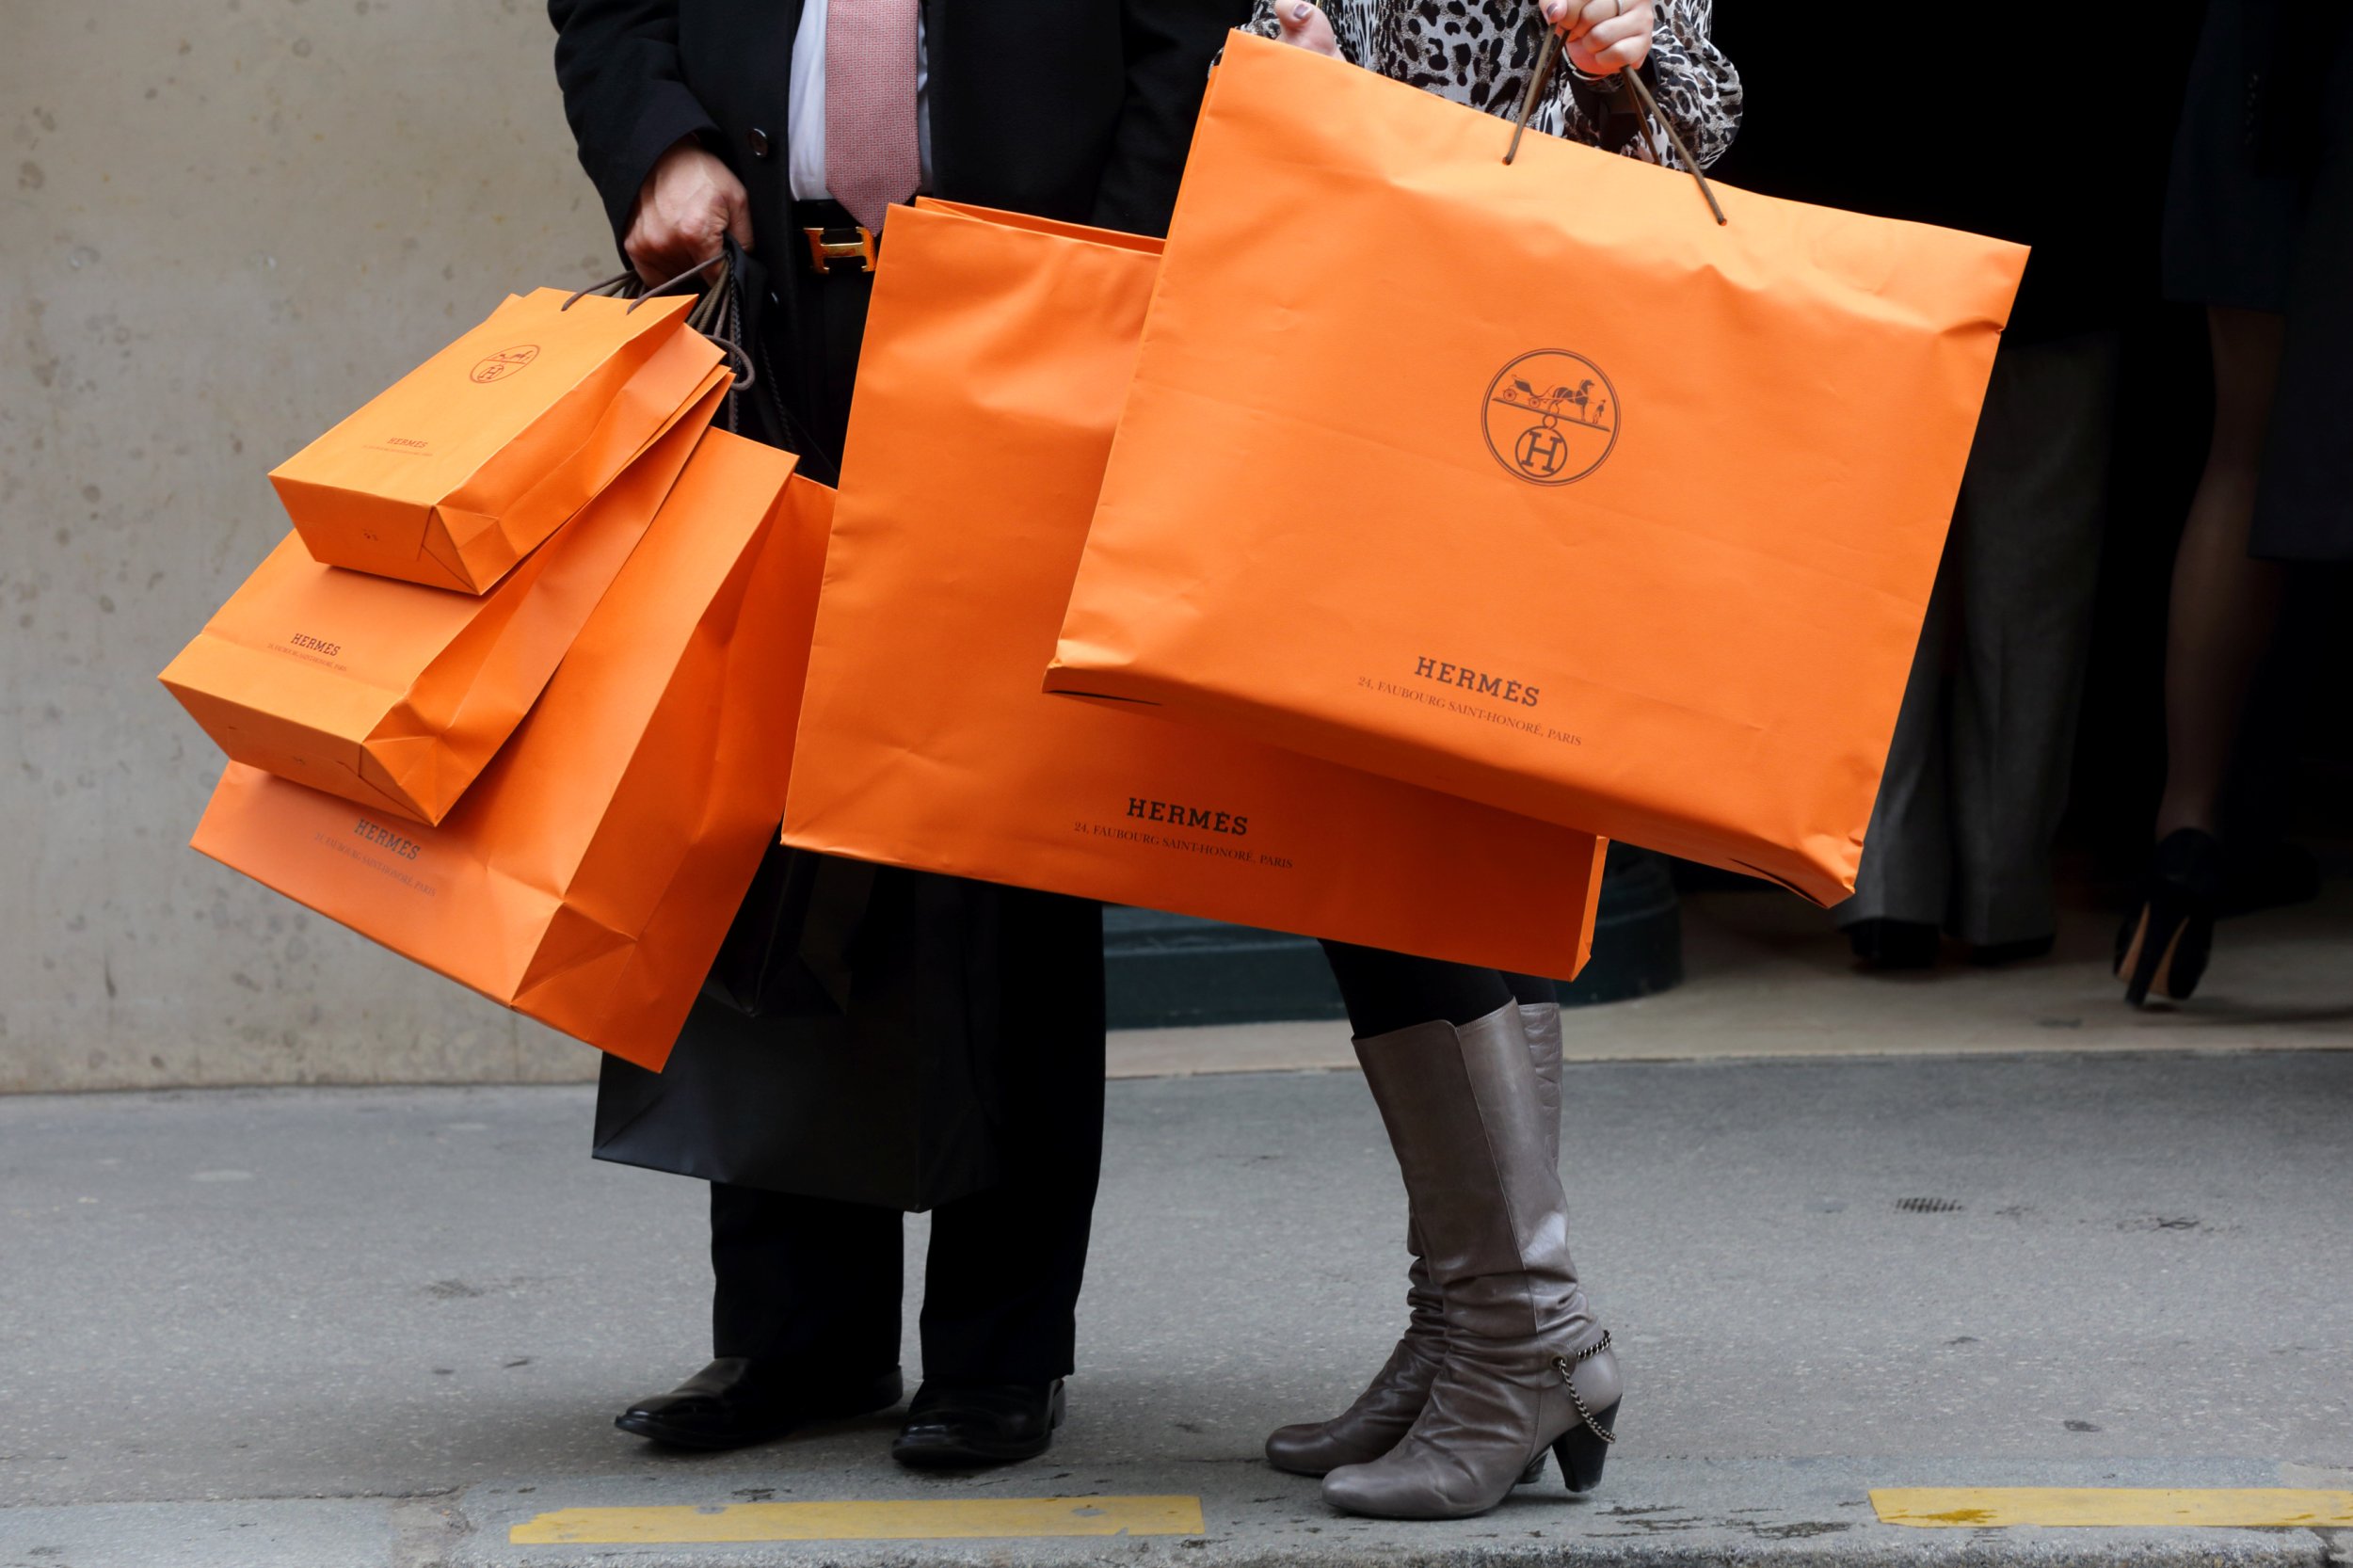 How To Spot A Fake Designer Bag Online: Tips For Purchasing Hermès